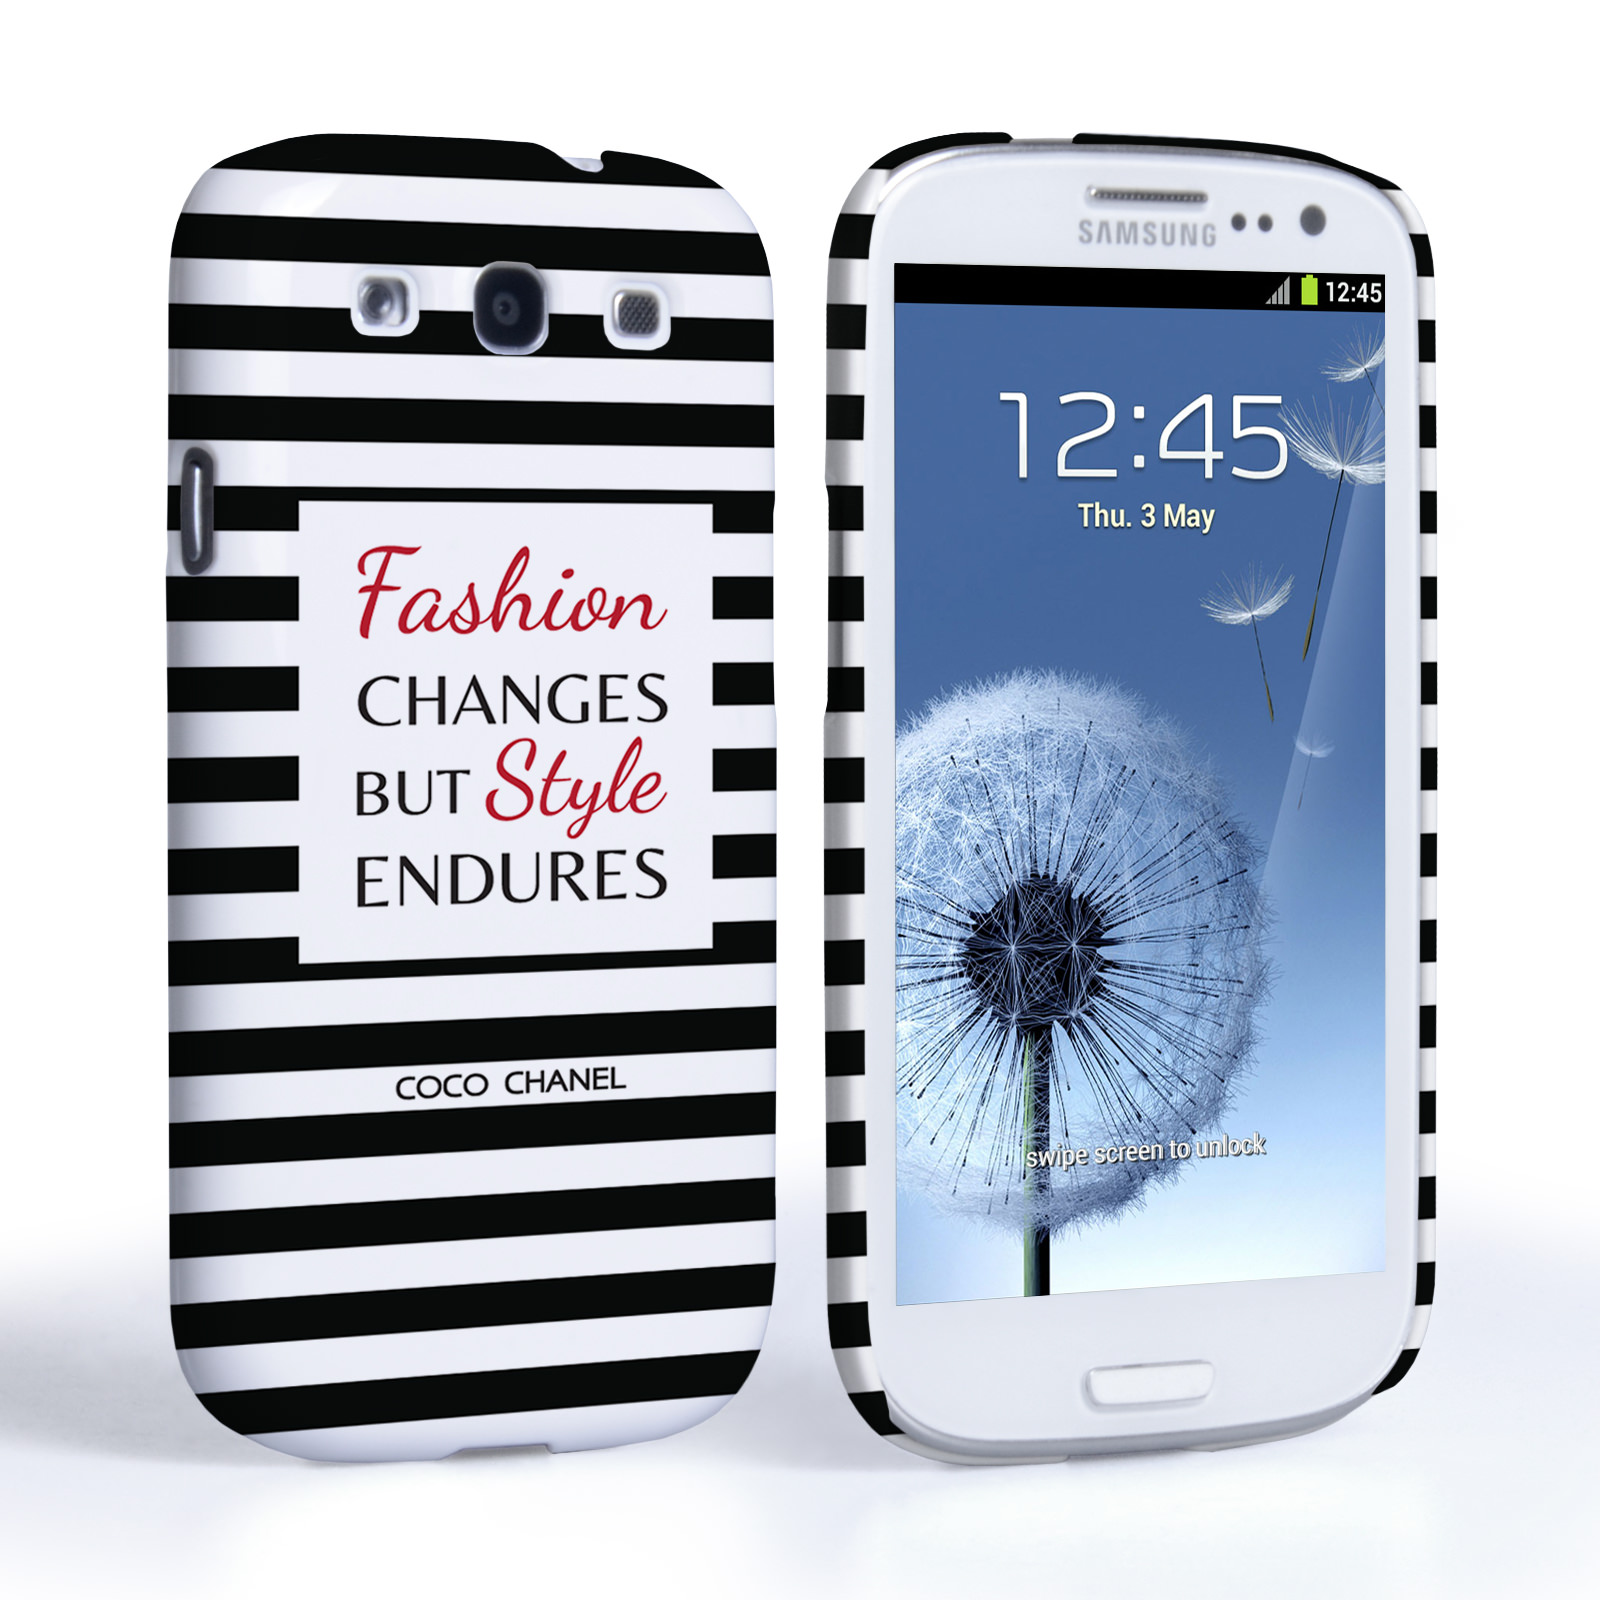 Caseflex Samsung Galaxy S3 Chanel ‘Fashion Changes’ Quote Case – Black and White